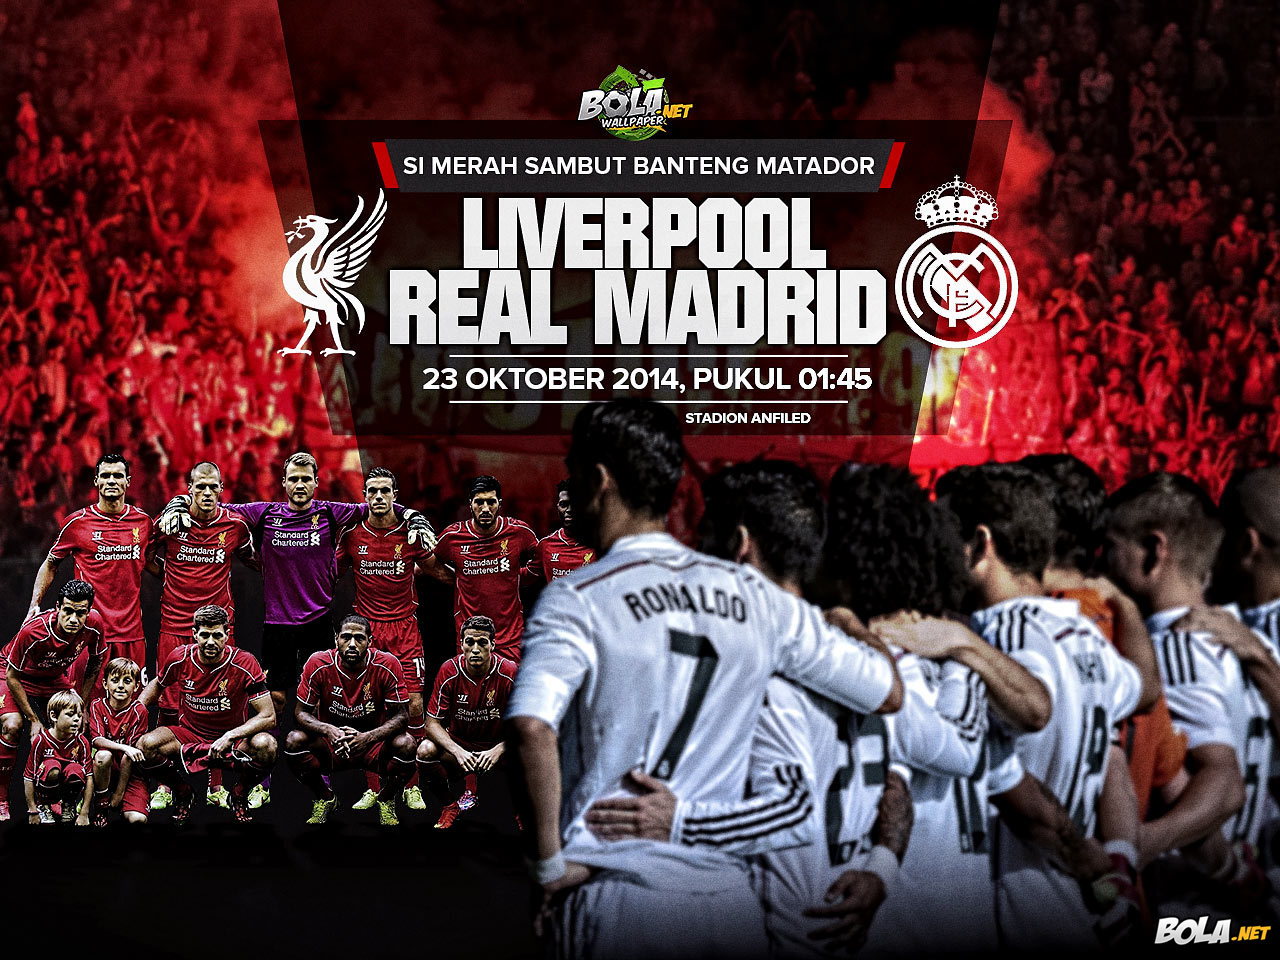 Download Wallpaper - Liverpool vs Real Madrid - Bola.net